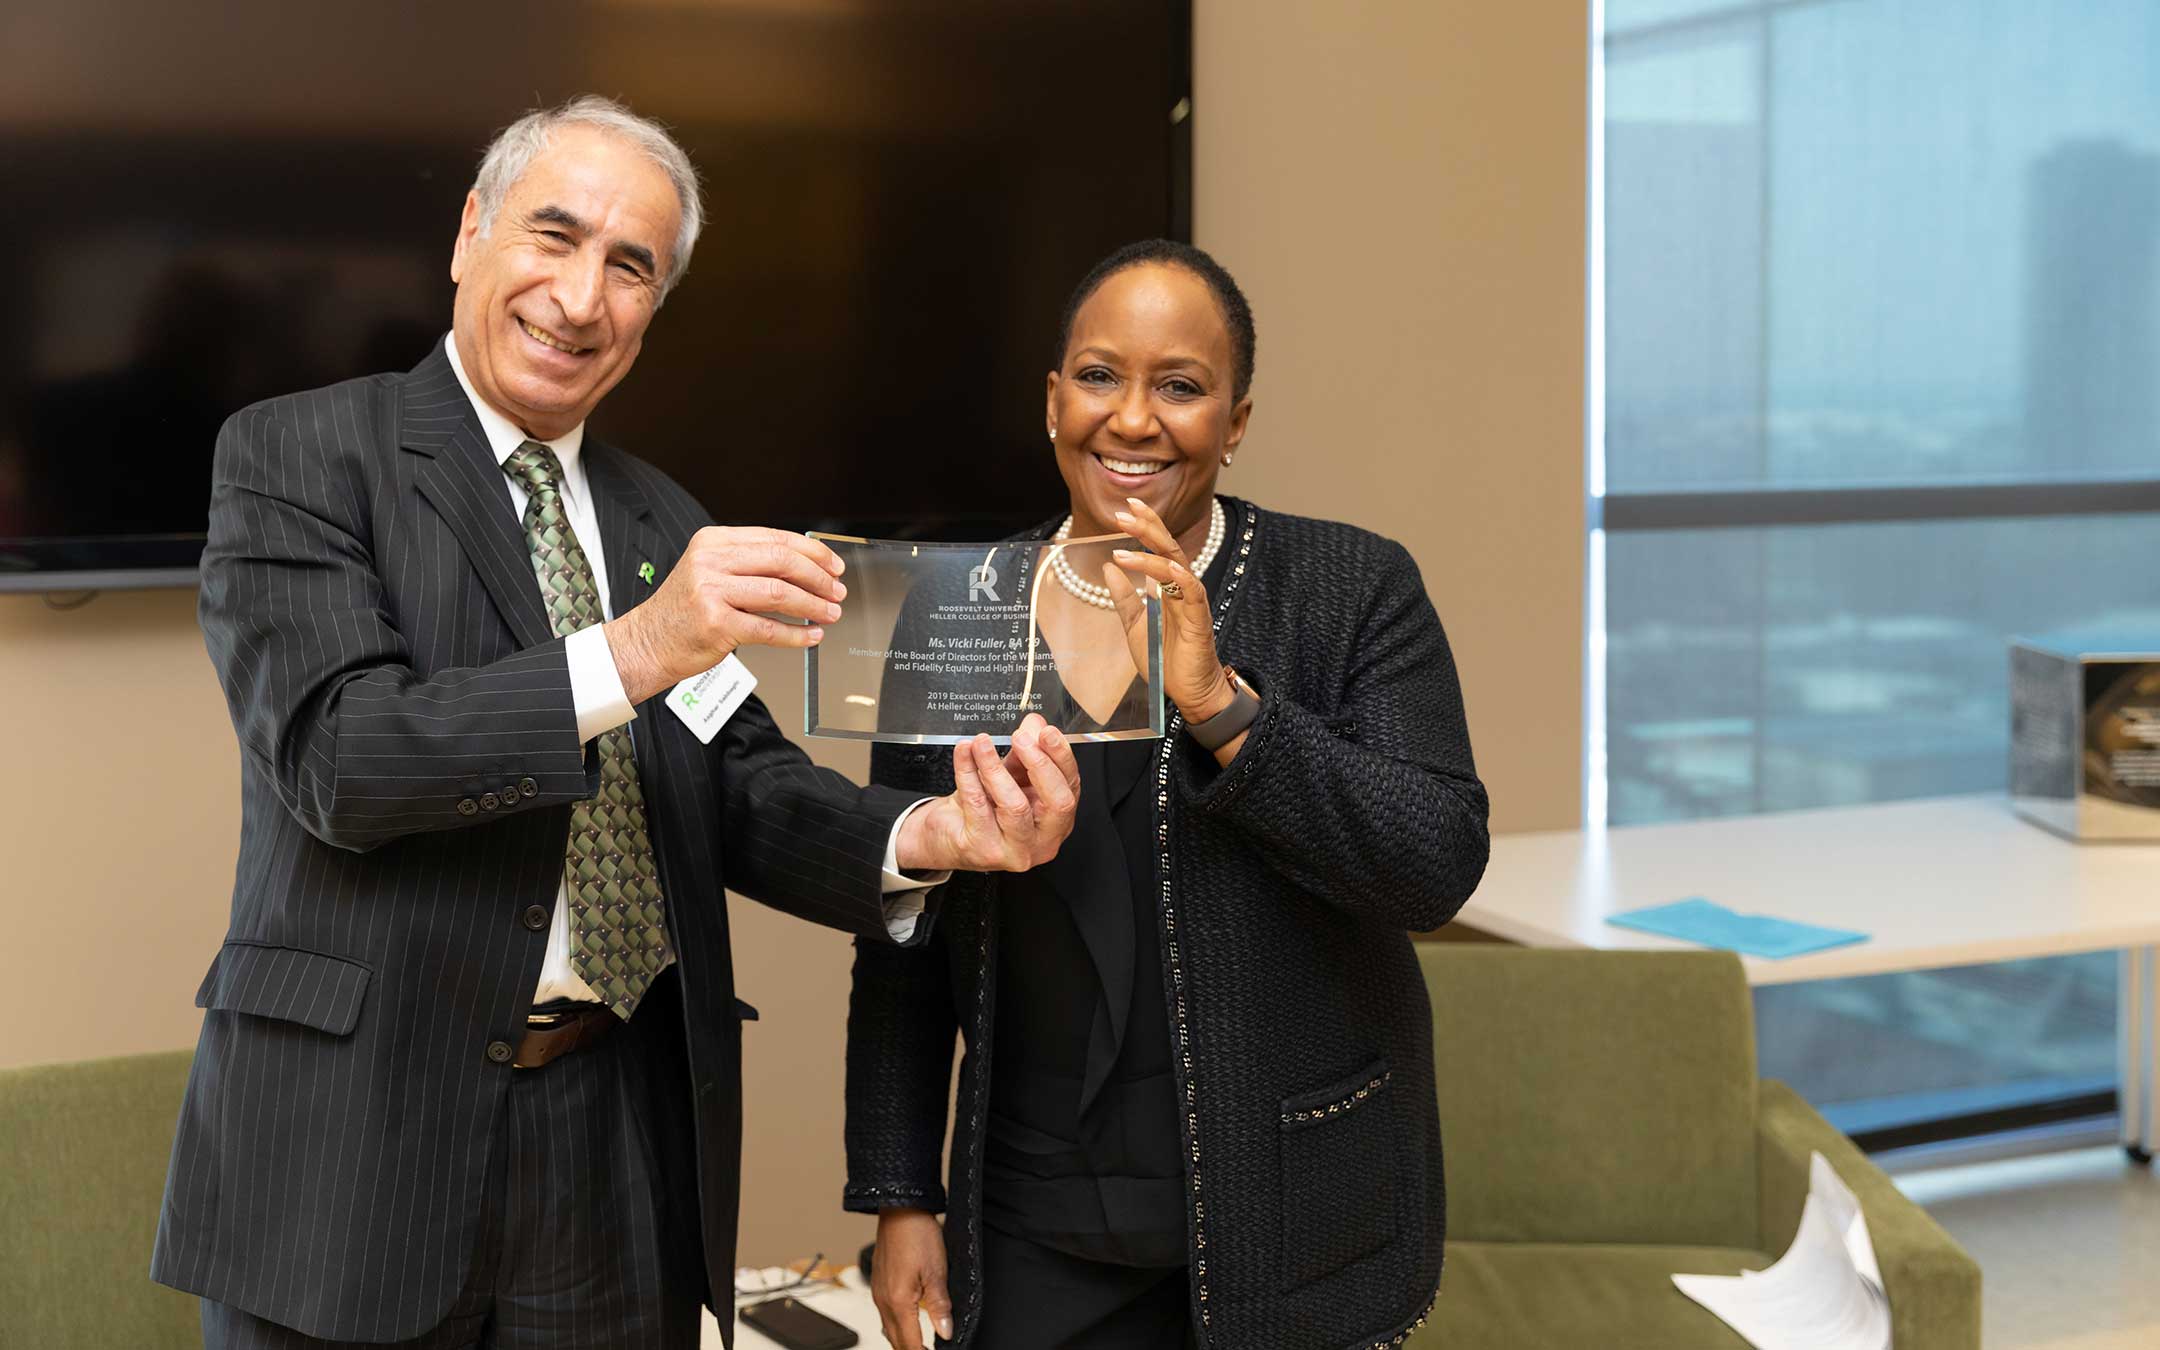 Heller College of Business Dean Asghar Sabbaghi presents an award to Roosevelt University's 2019 Executive-in-Residence Vicki Fuller